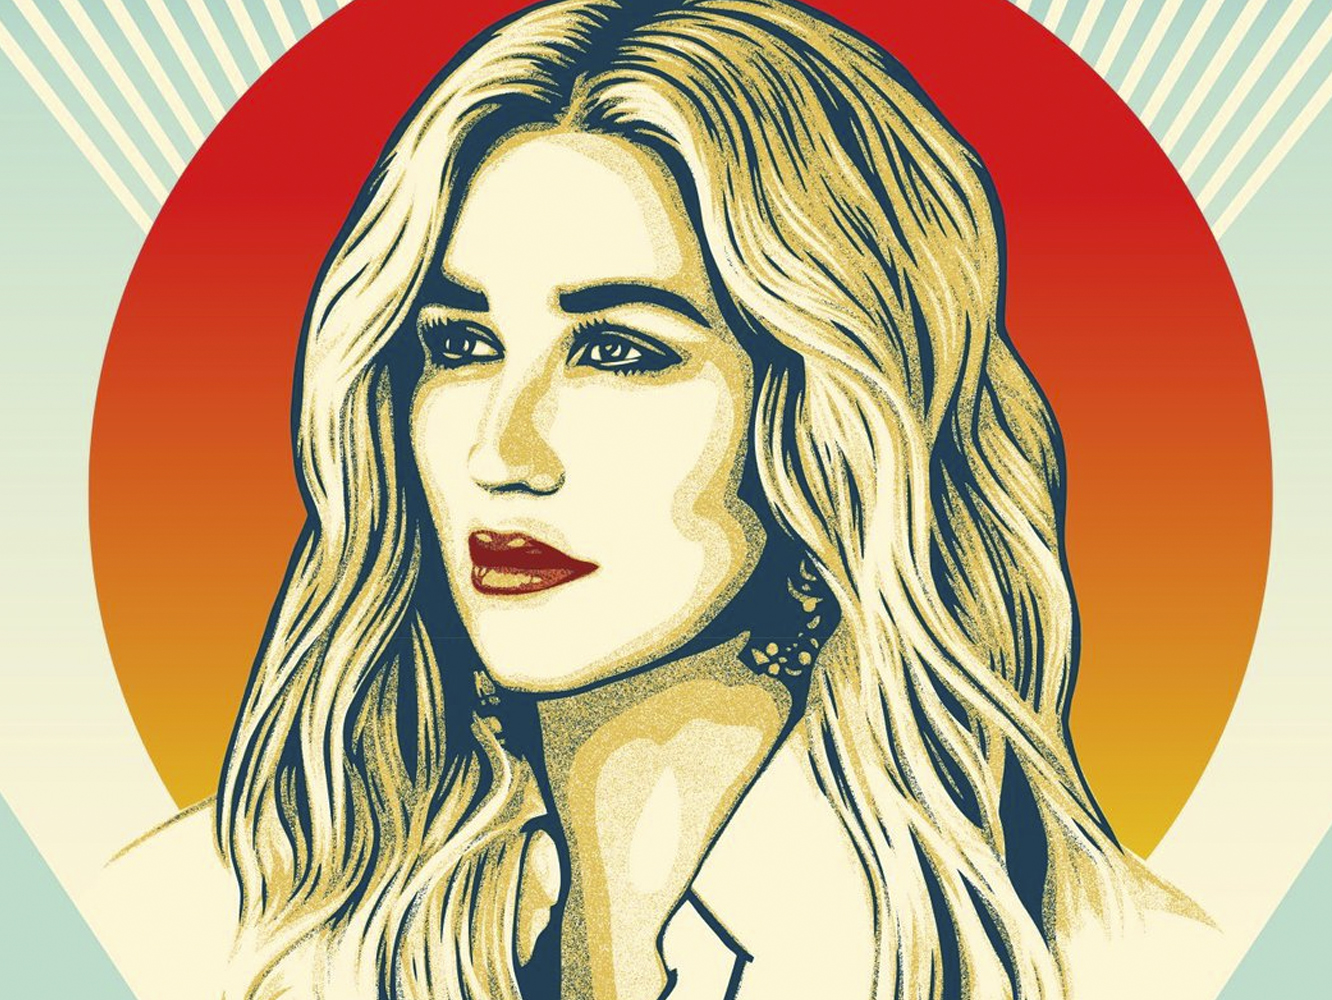  La activista folk americana Kesha lanza ‘Here Comes The Change’